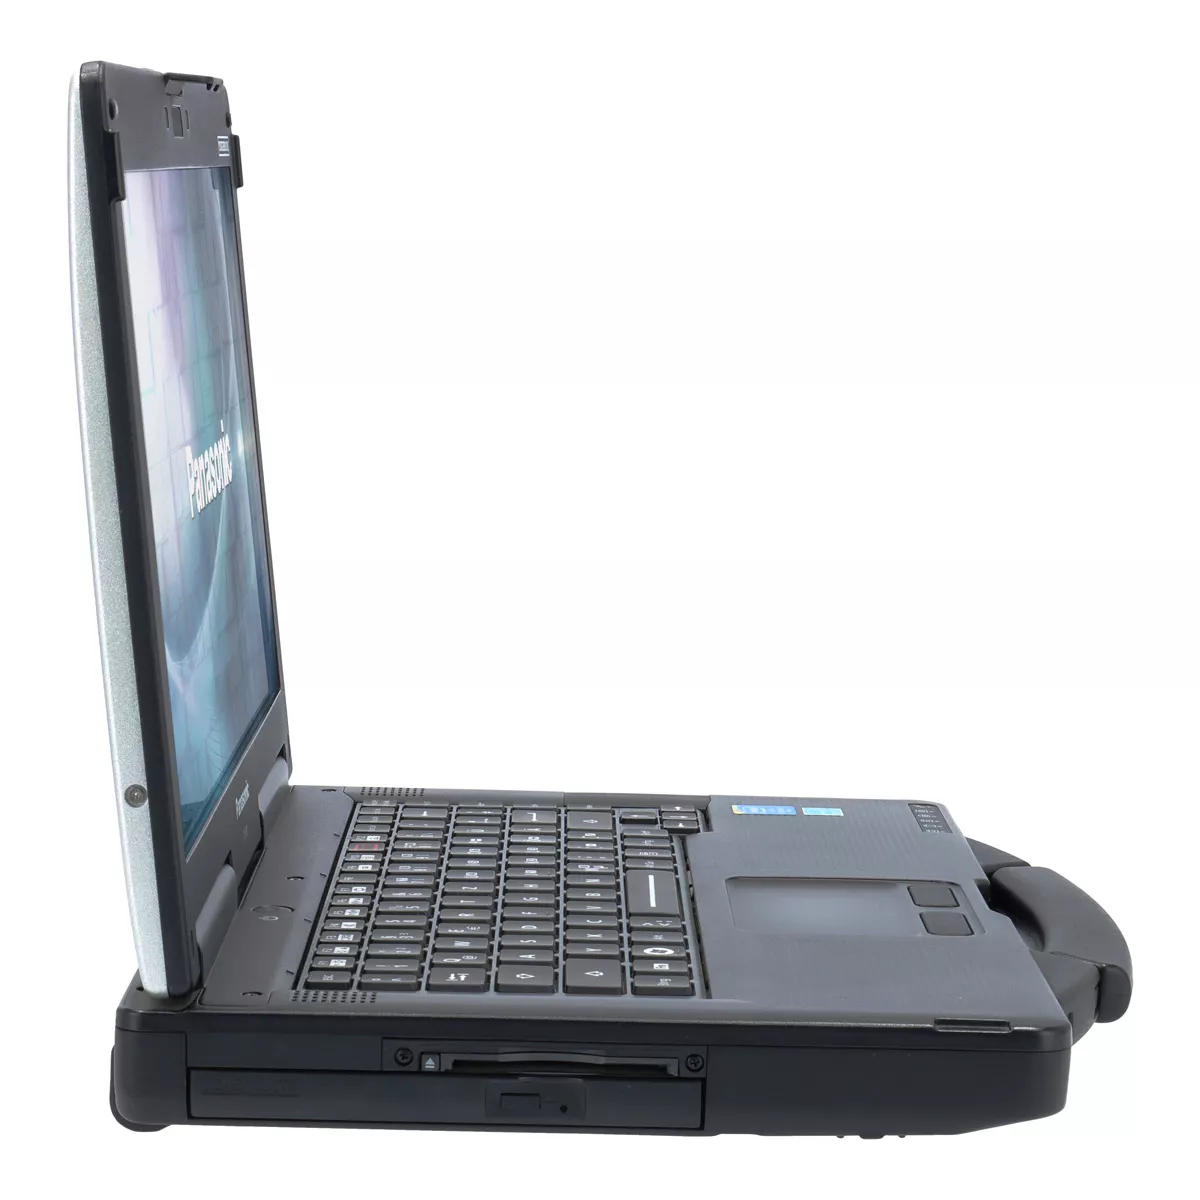 Outdoor Notebook Panasonic Toughbook CF-53 Core i5 3340M 2,7 GHz